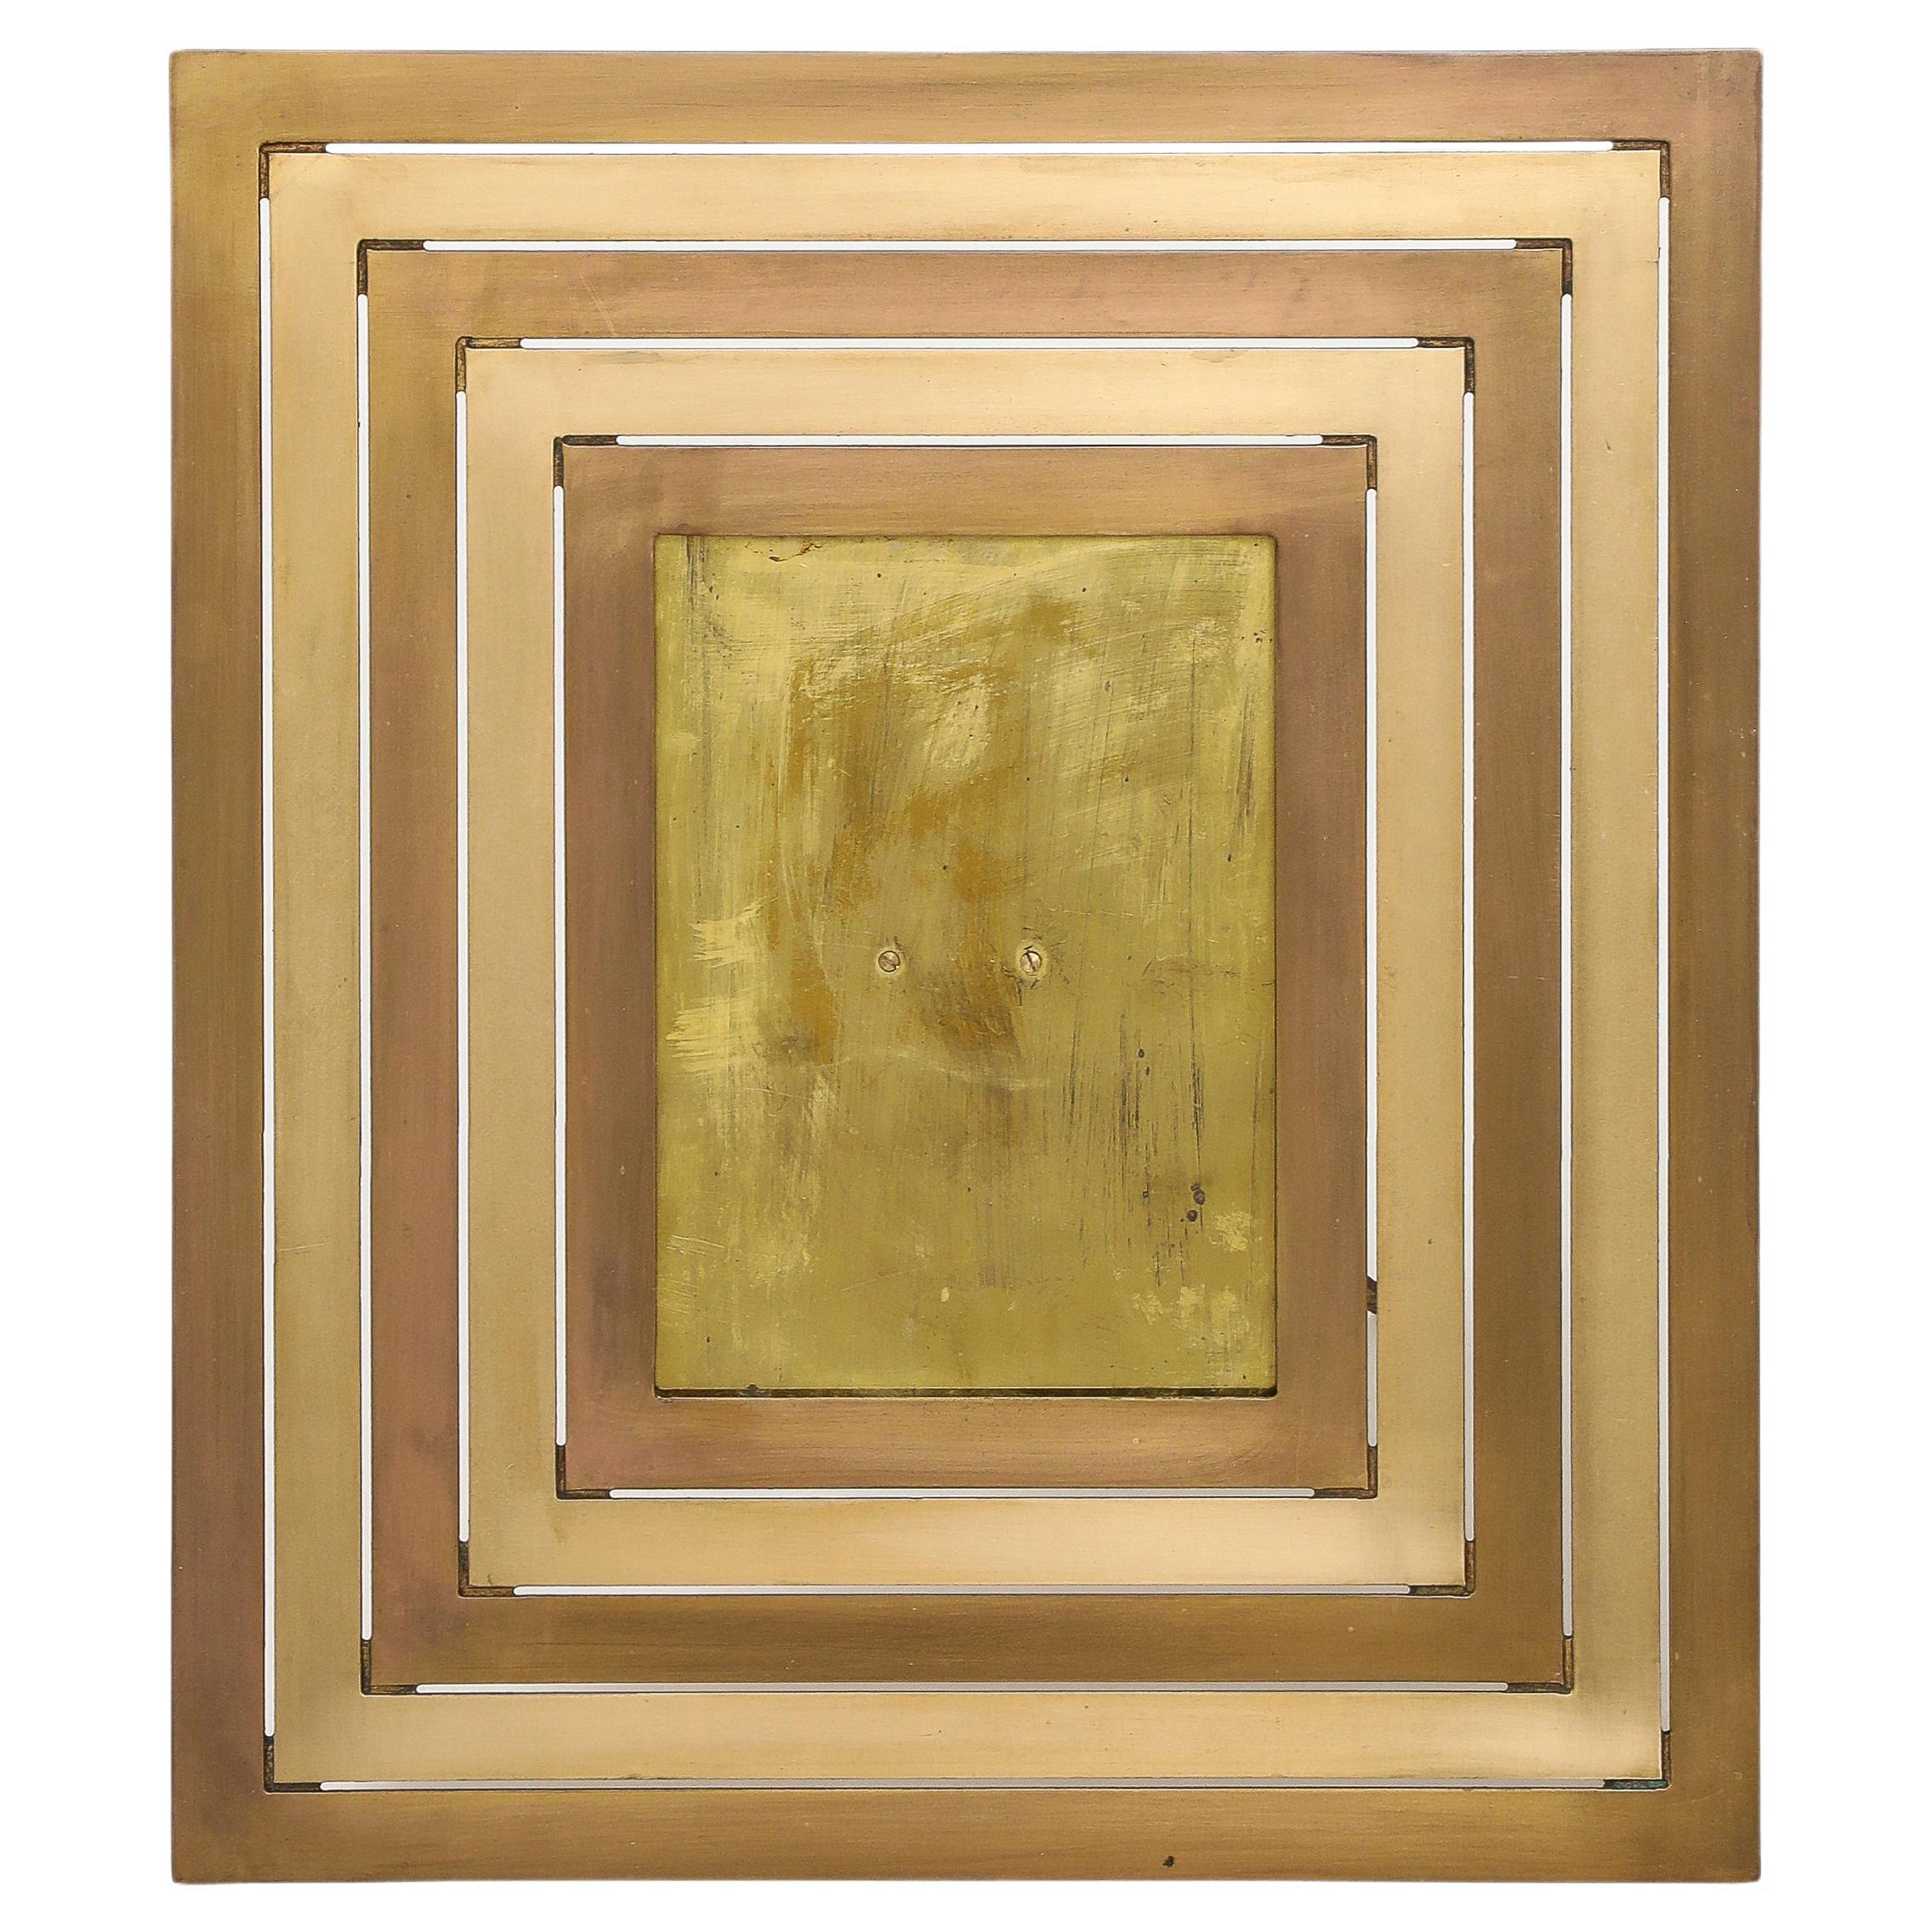 Gabriella Crespi Large Brass Rectangular Picture Frame, Signed